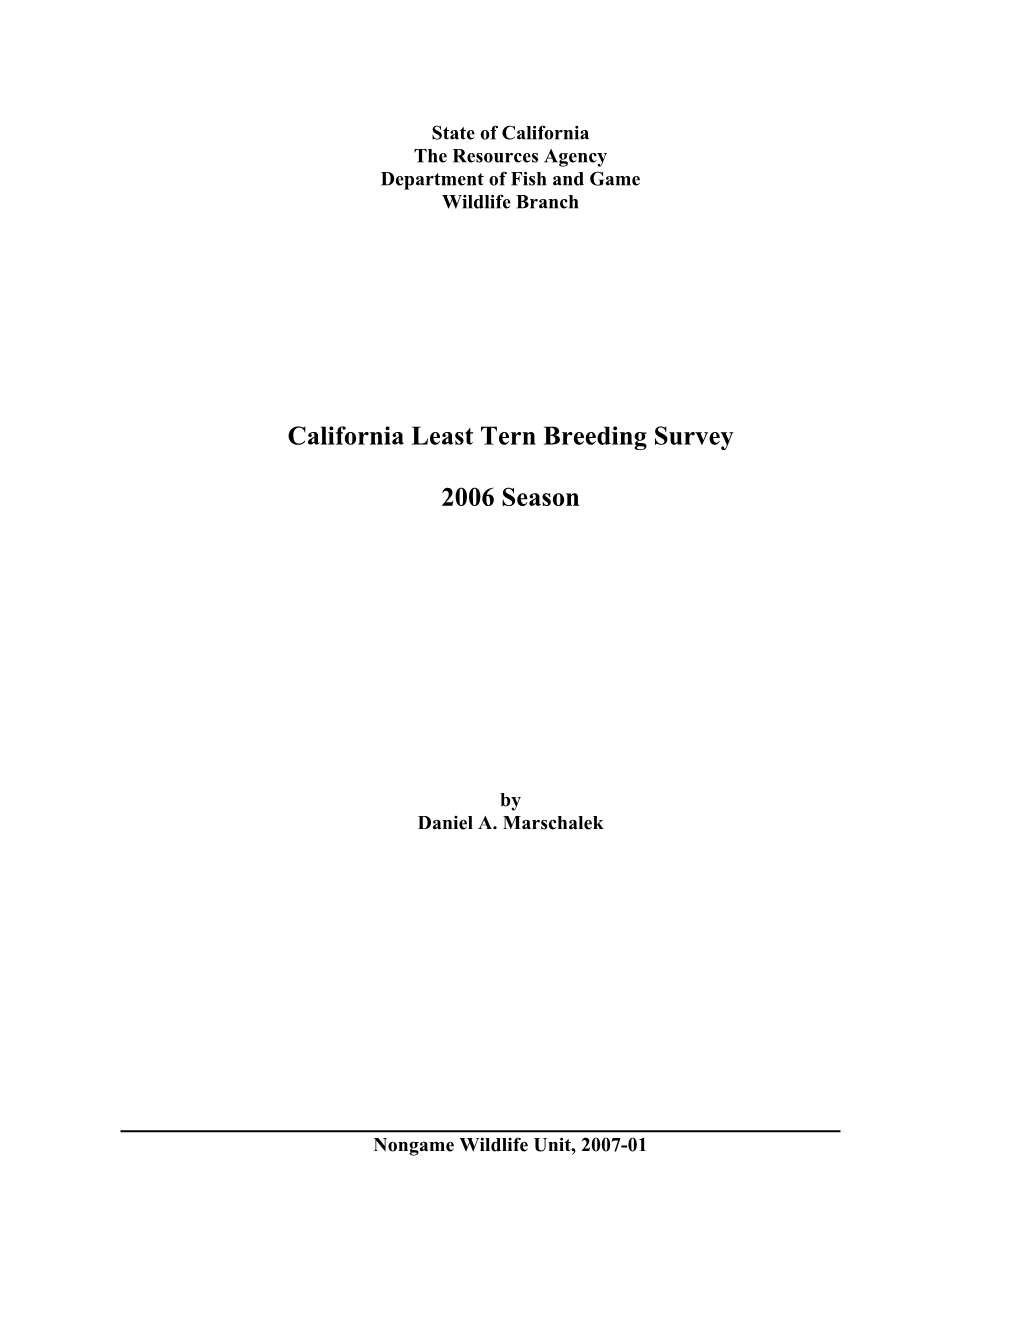 California Least Tern Breeding Survey 2006 Season1